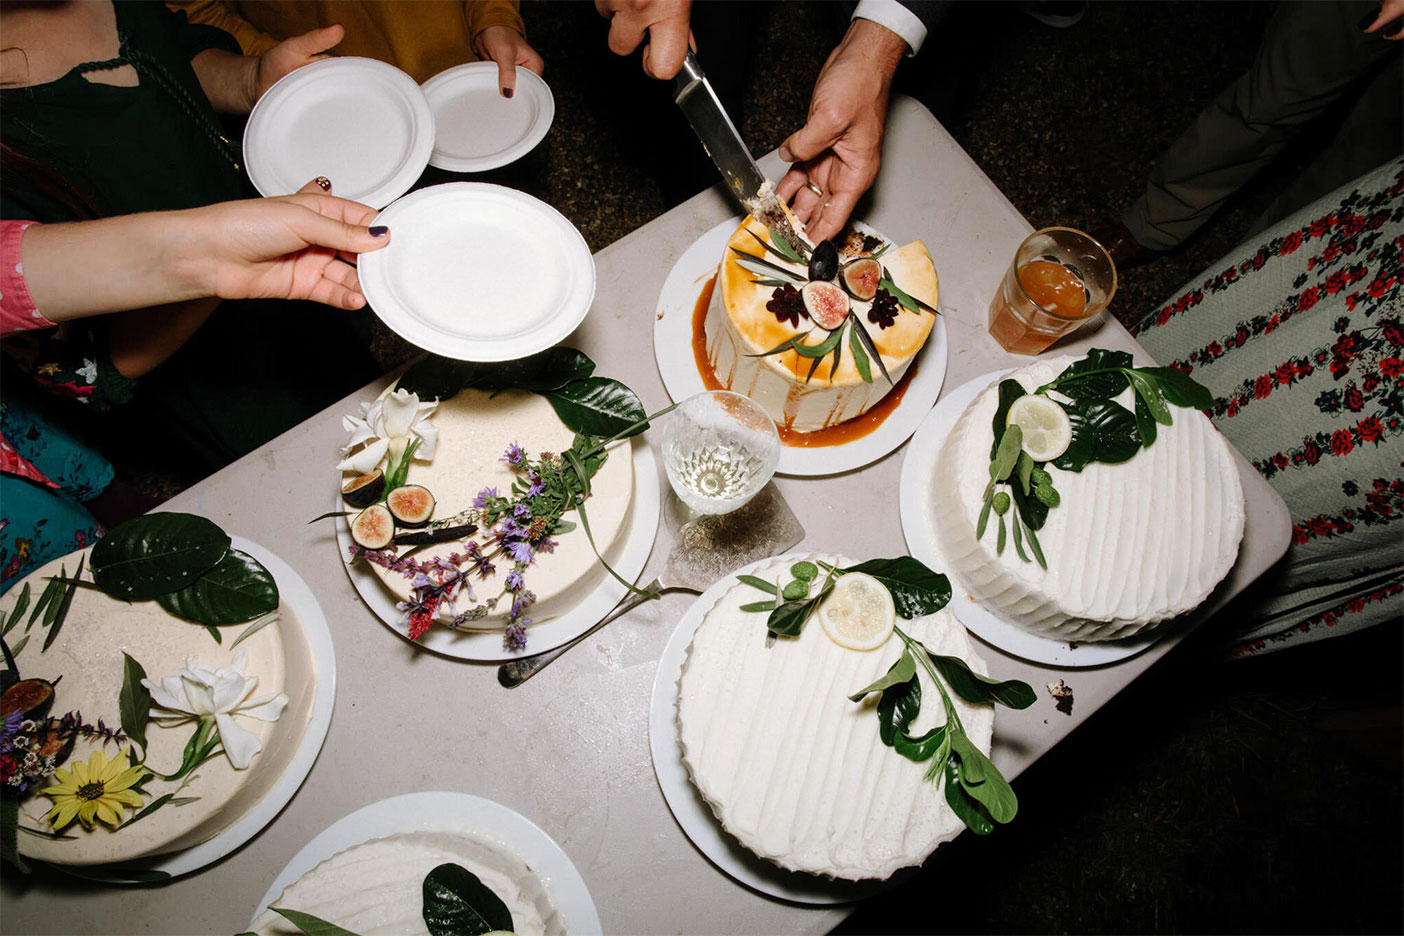 wedding cakes being cut